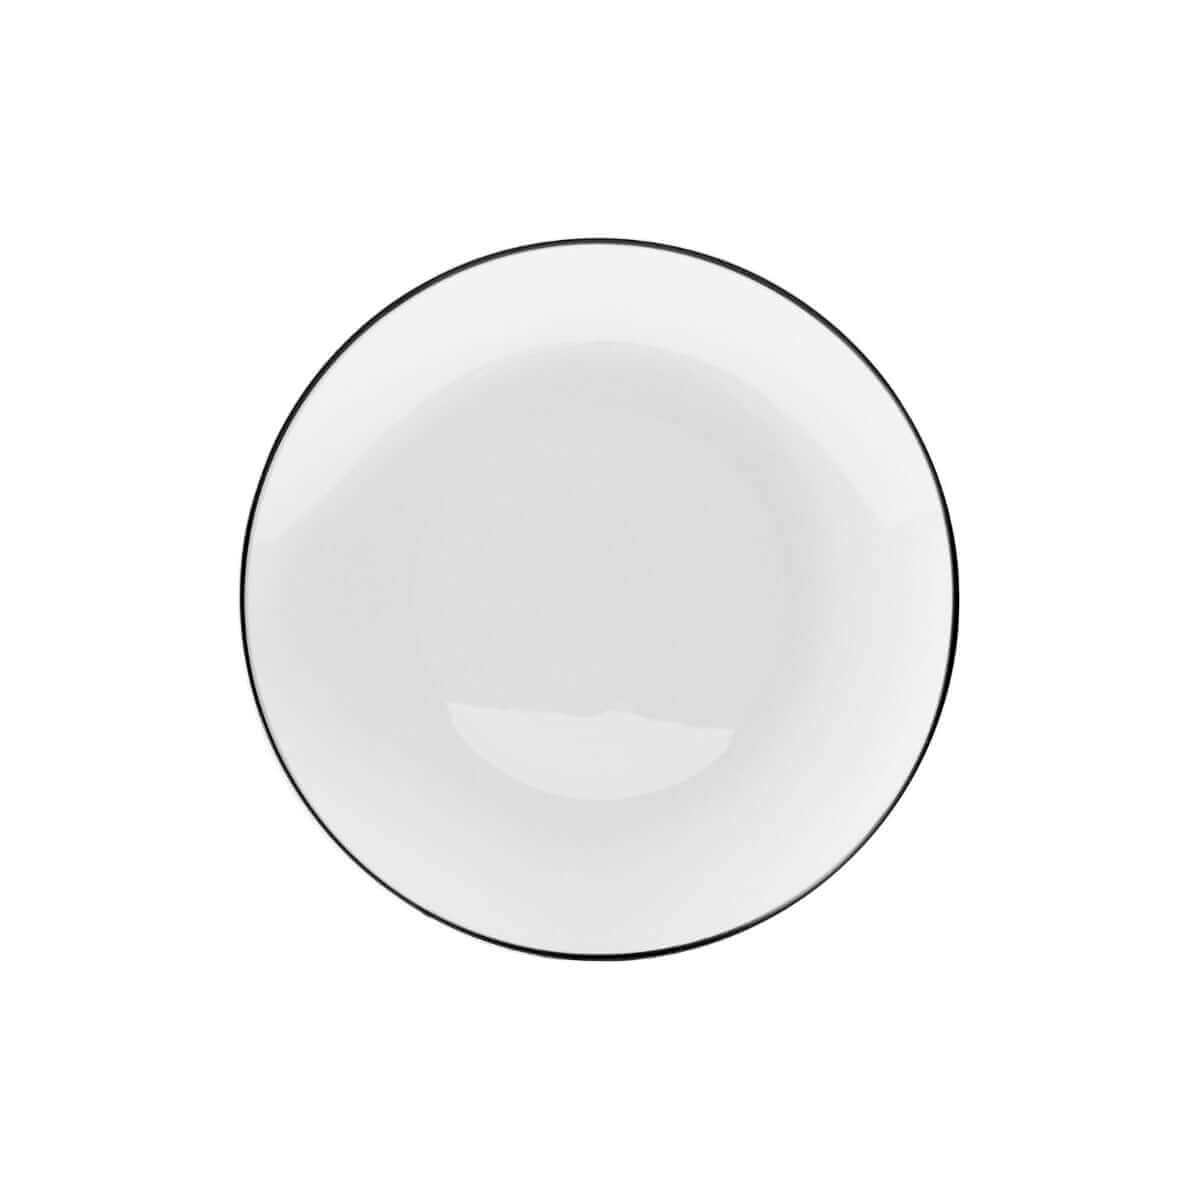 8" White & Black Rim Design Plastic Plates (120 Count) - Yom Tov Settings